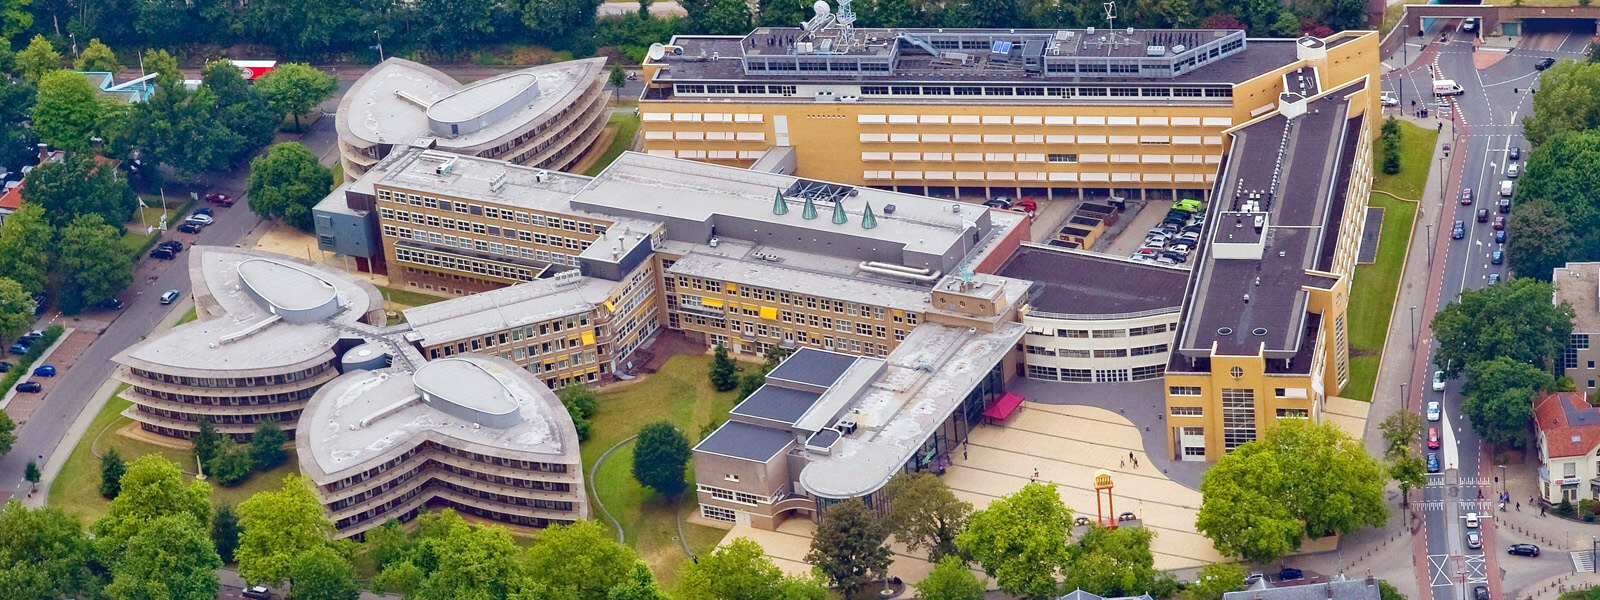 universitiesofappliedsciences-saxion building-enschede-holland